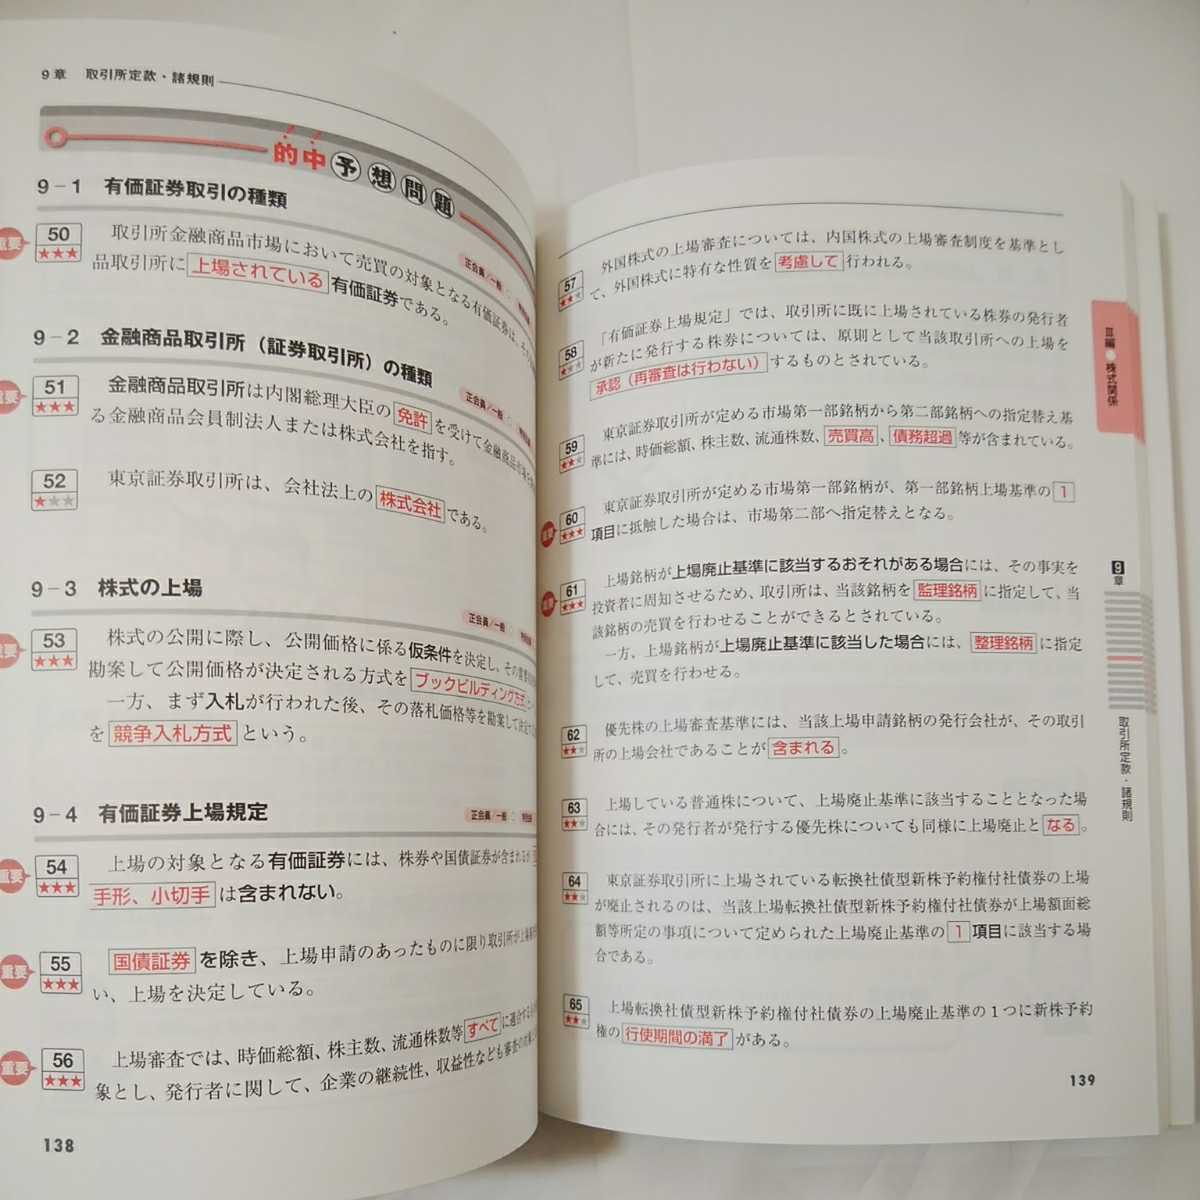 Paypayフリマ Zaa021 スピード合格 証券外務員二種 正会員 一般 特別会員 図解テキスト 的中予想問題 Licence Books 日本語 単行本 12